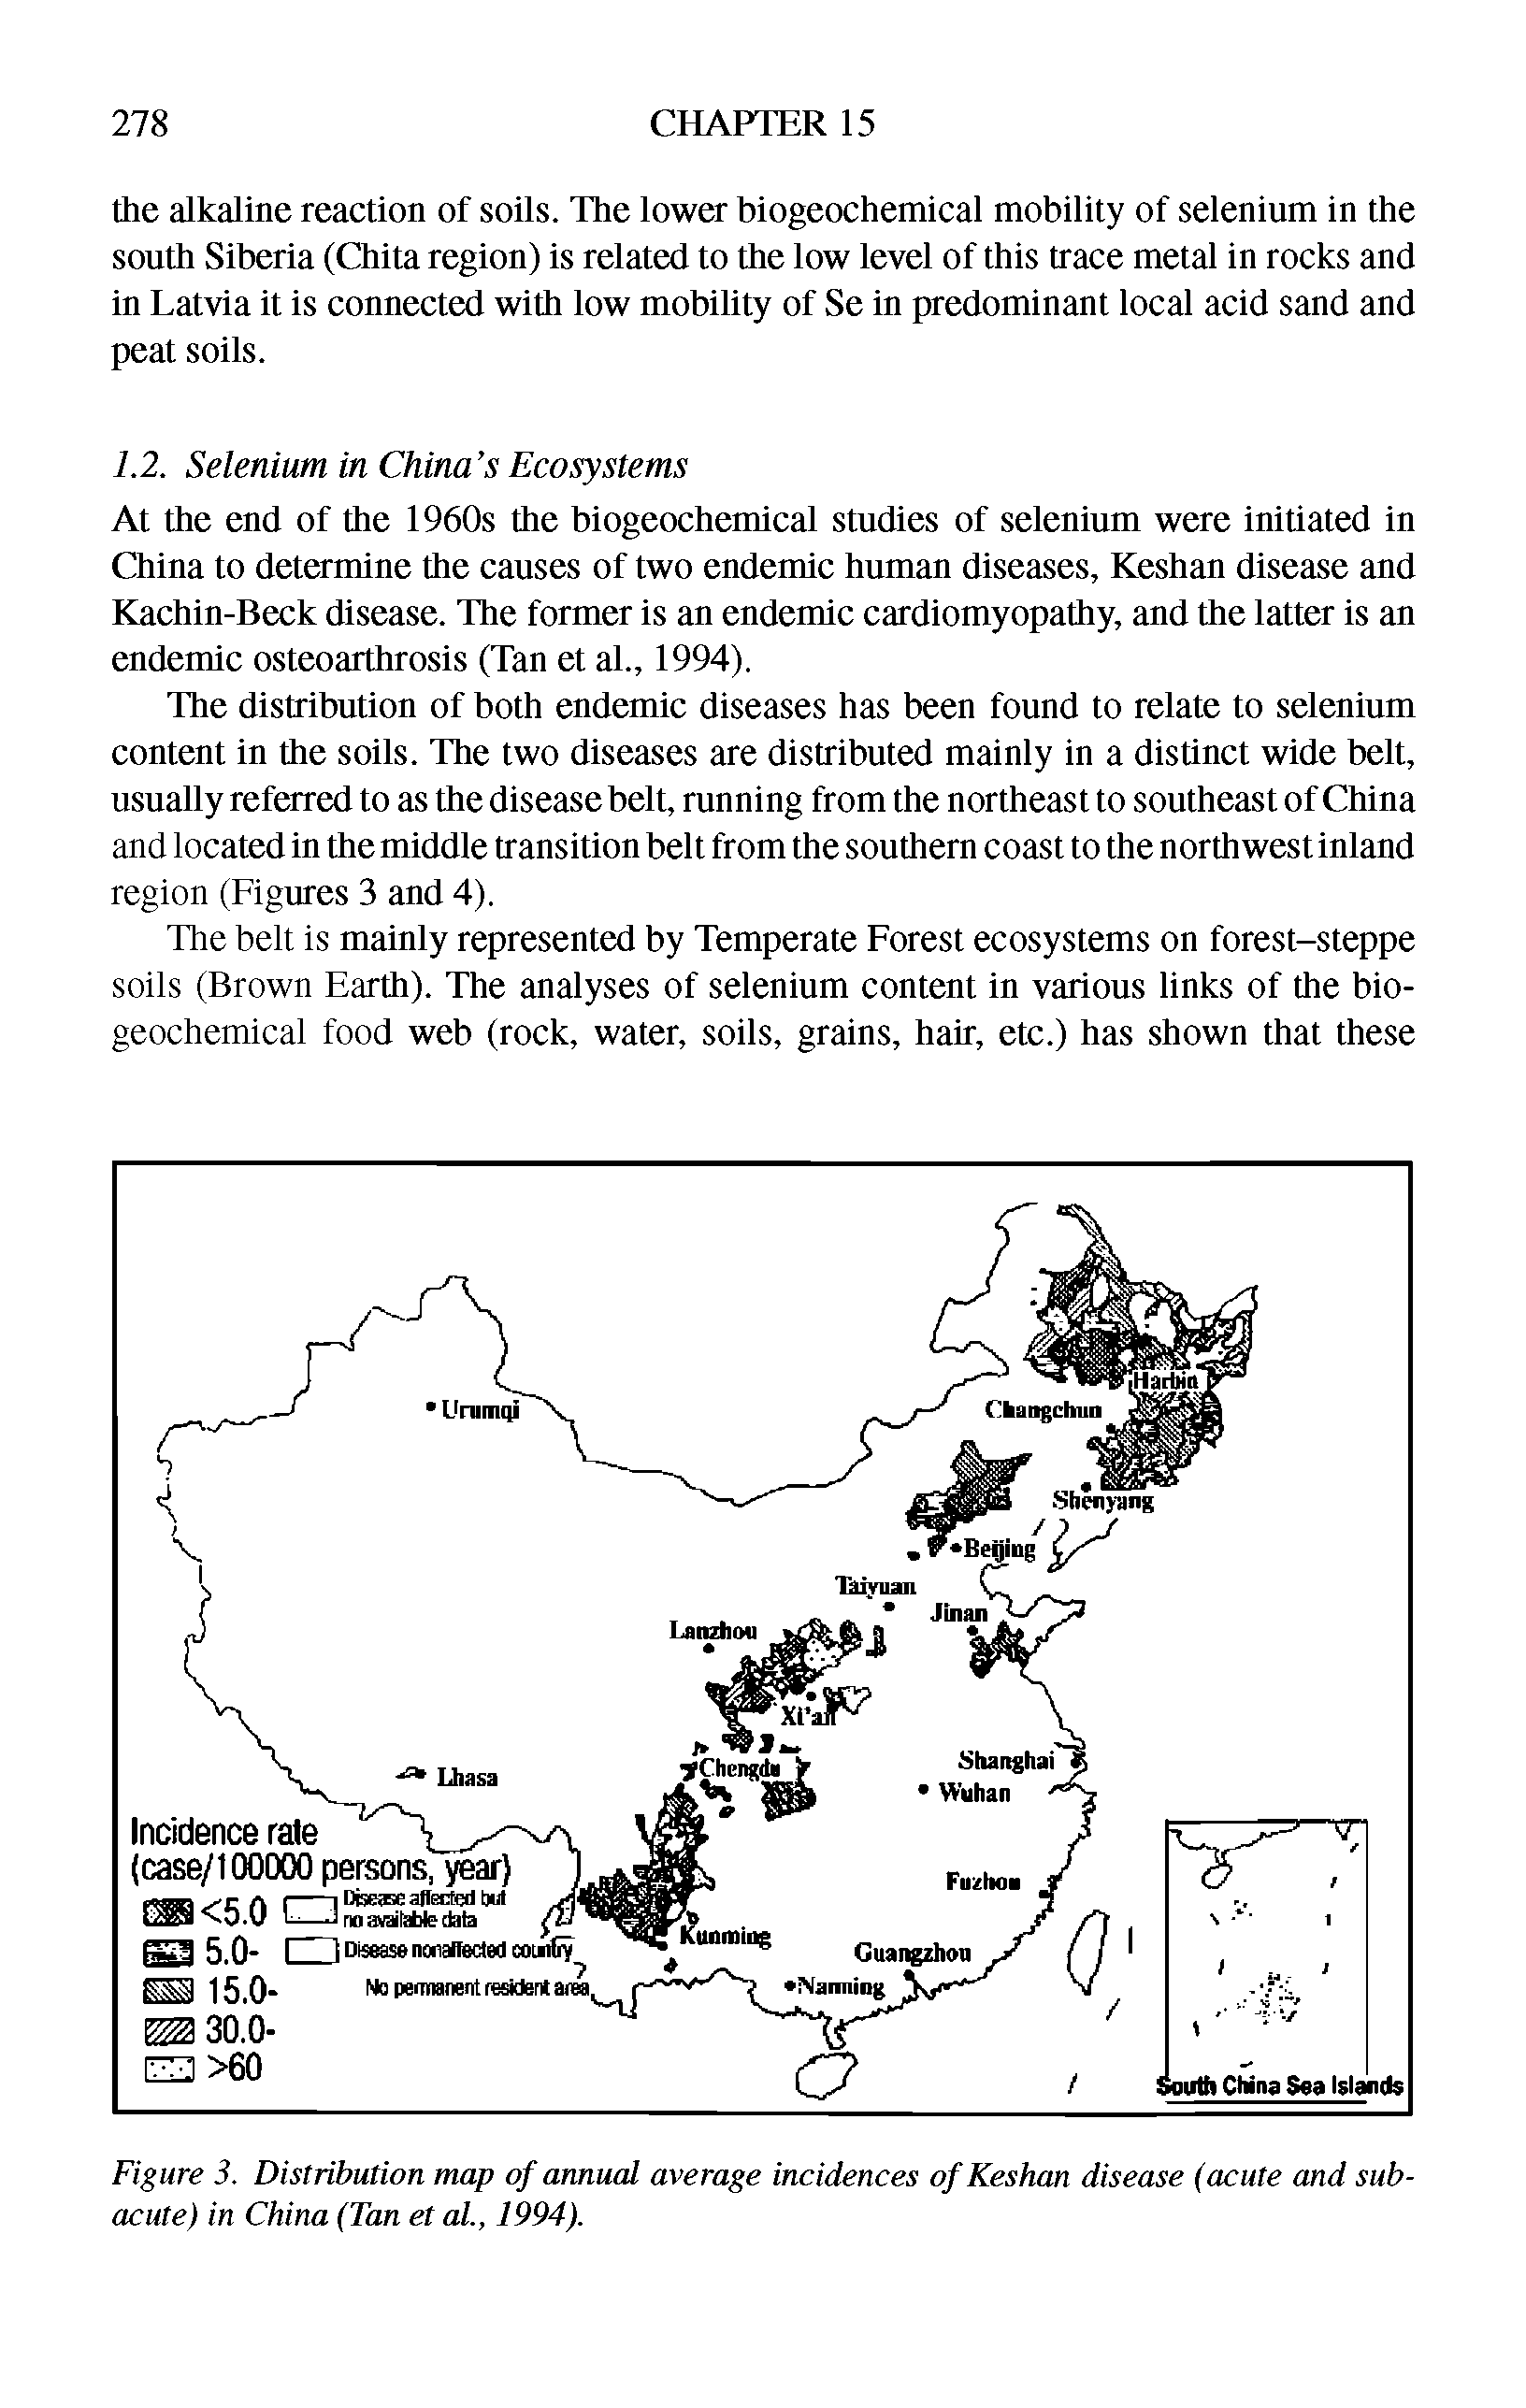 Figure 3. Distribution map of annual average incidences of Keshan disease (acute and subacute) in China (Tan et al., 1994).